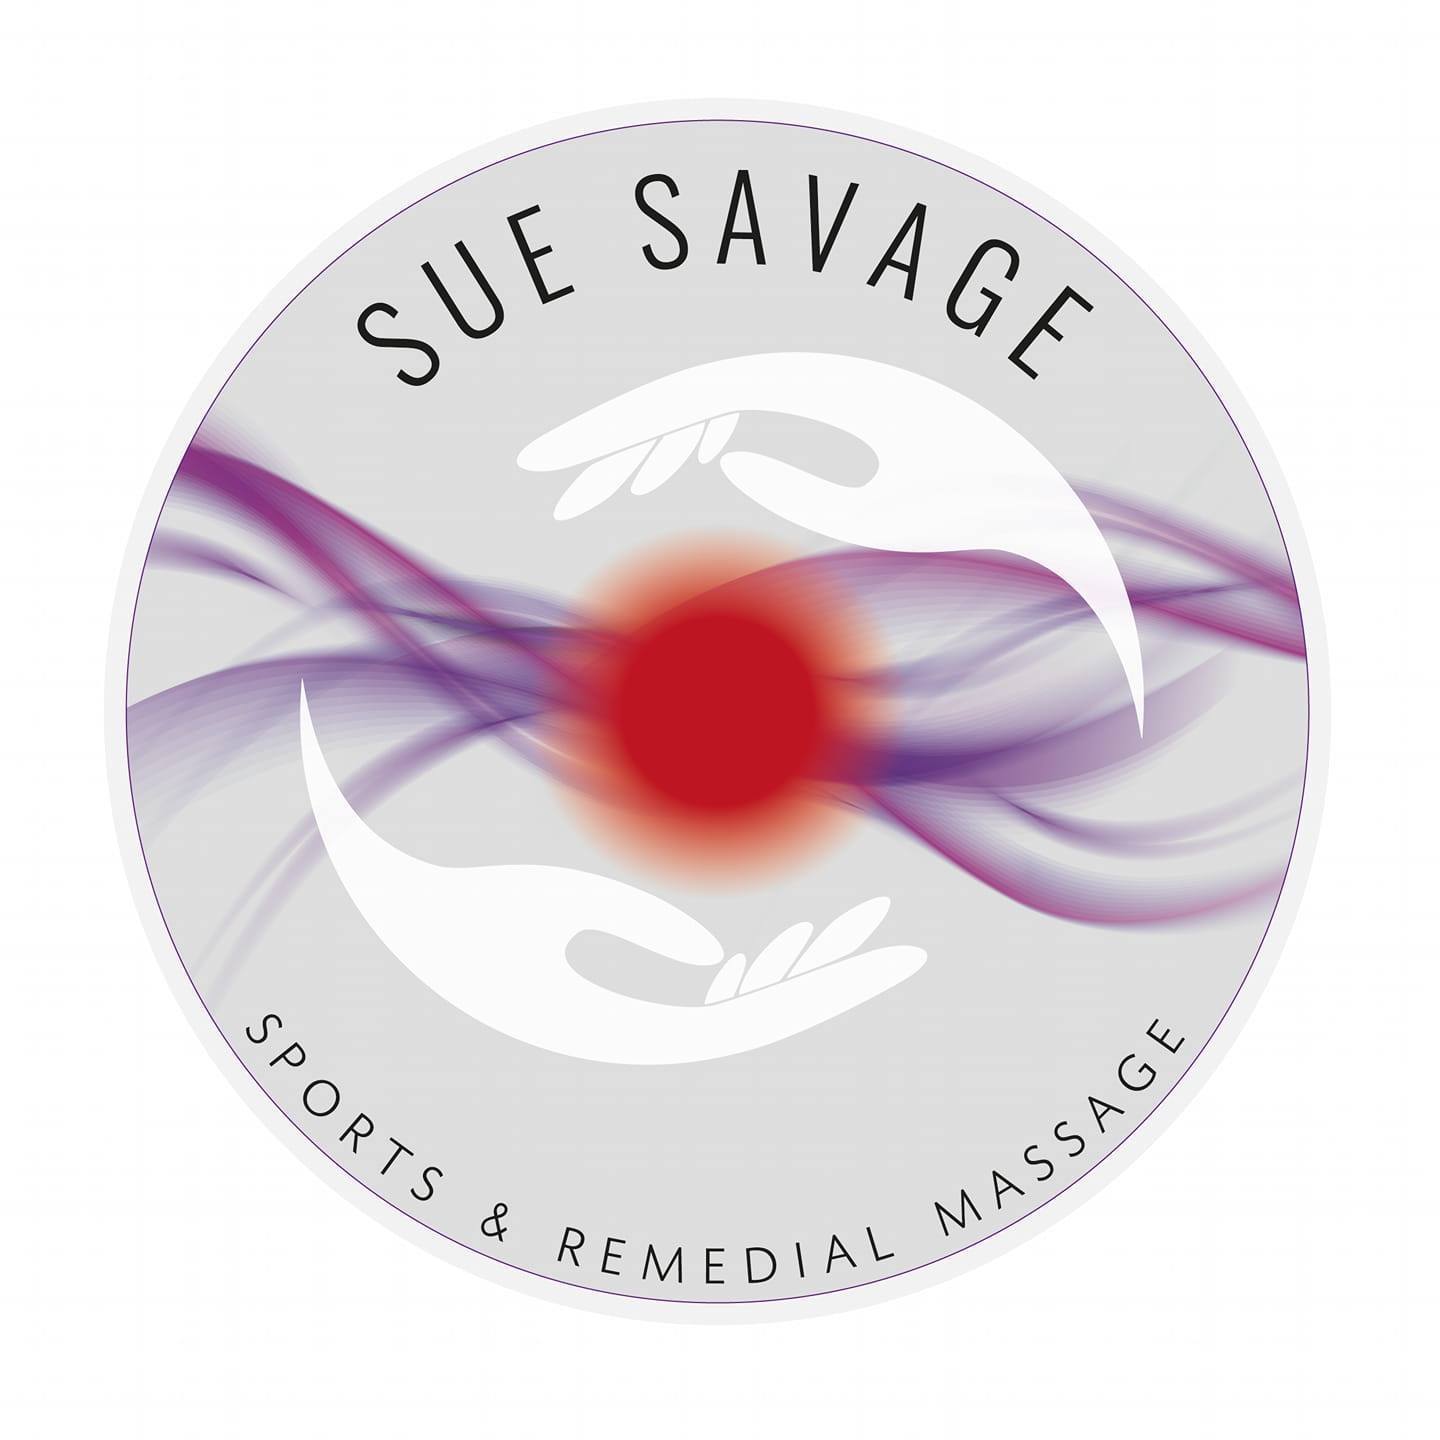 Sue Savage Sports & Remedial Massage